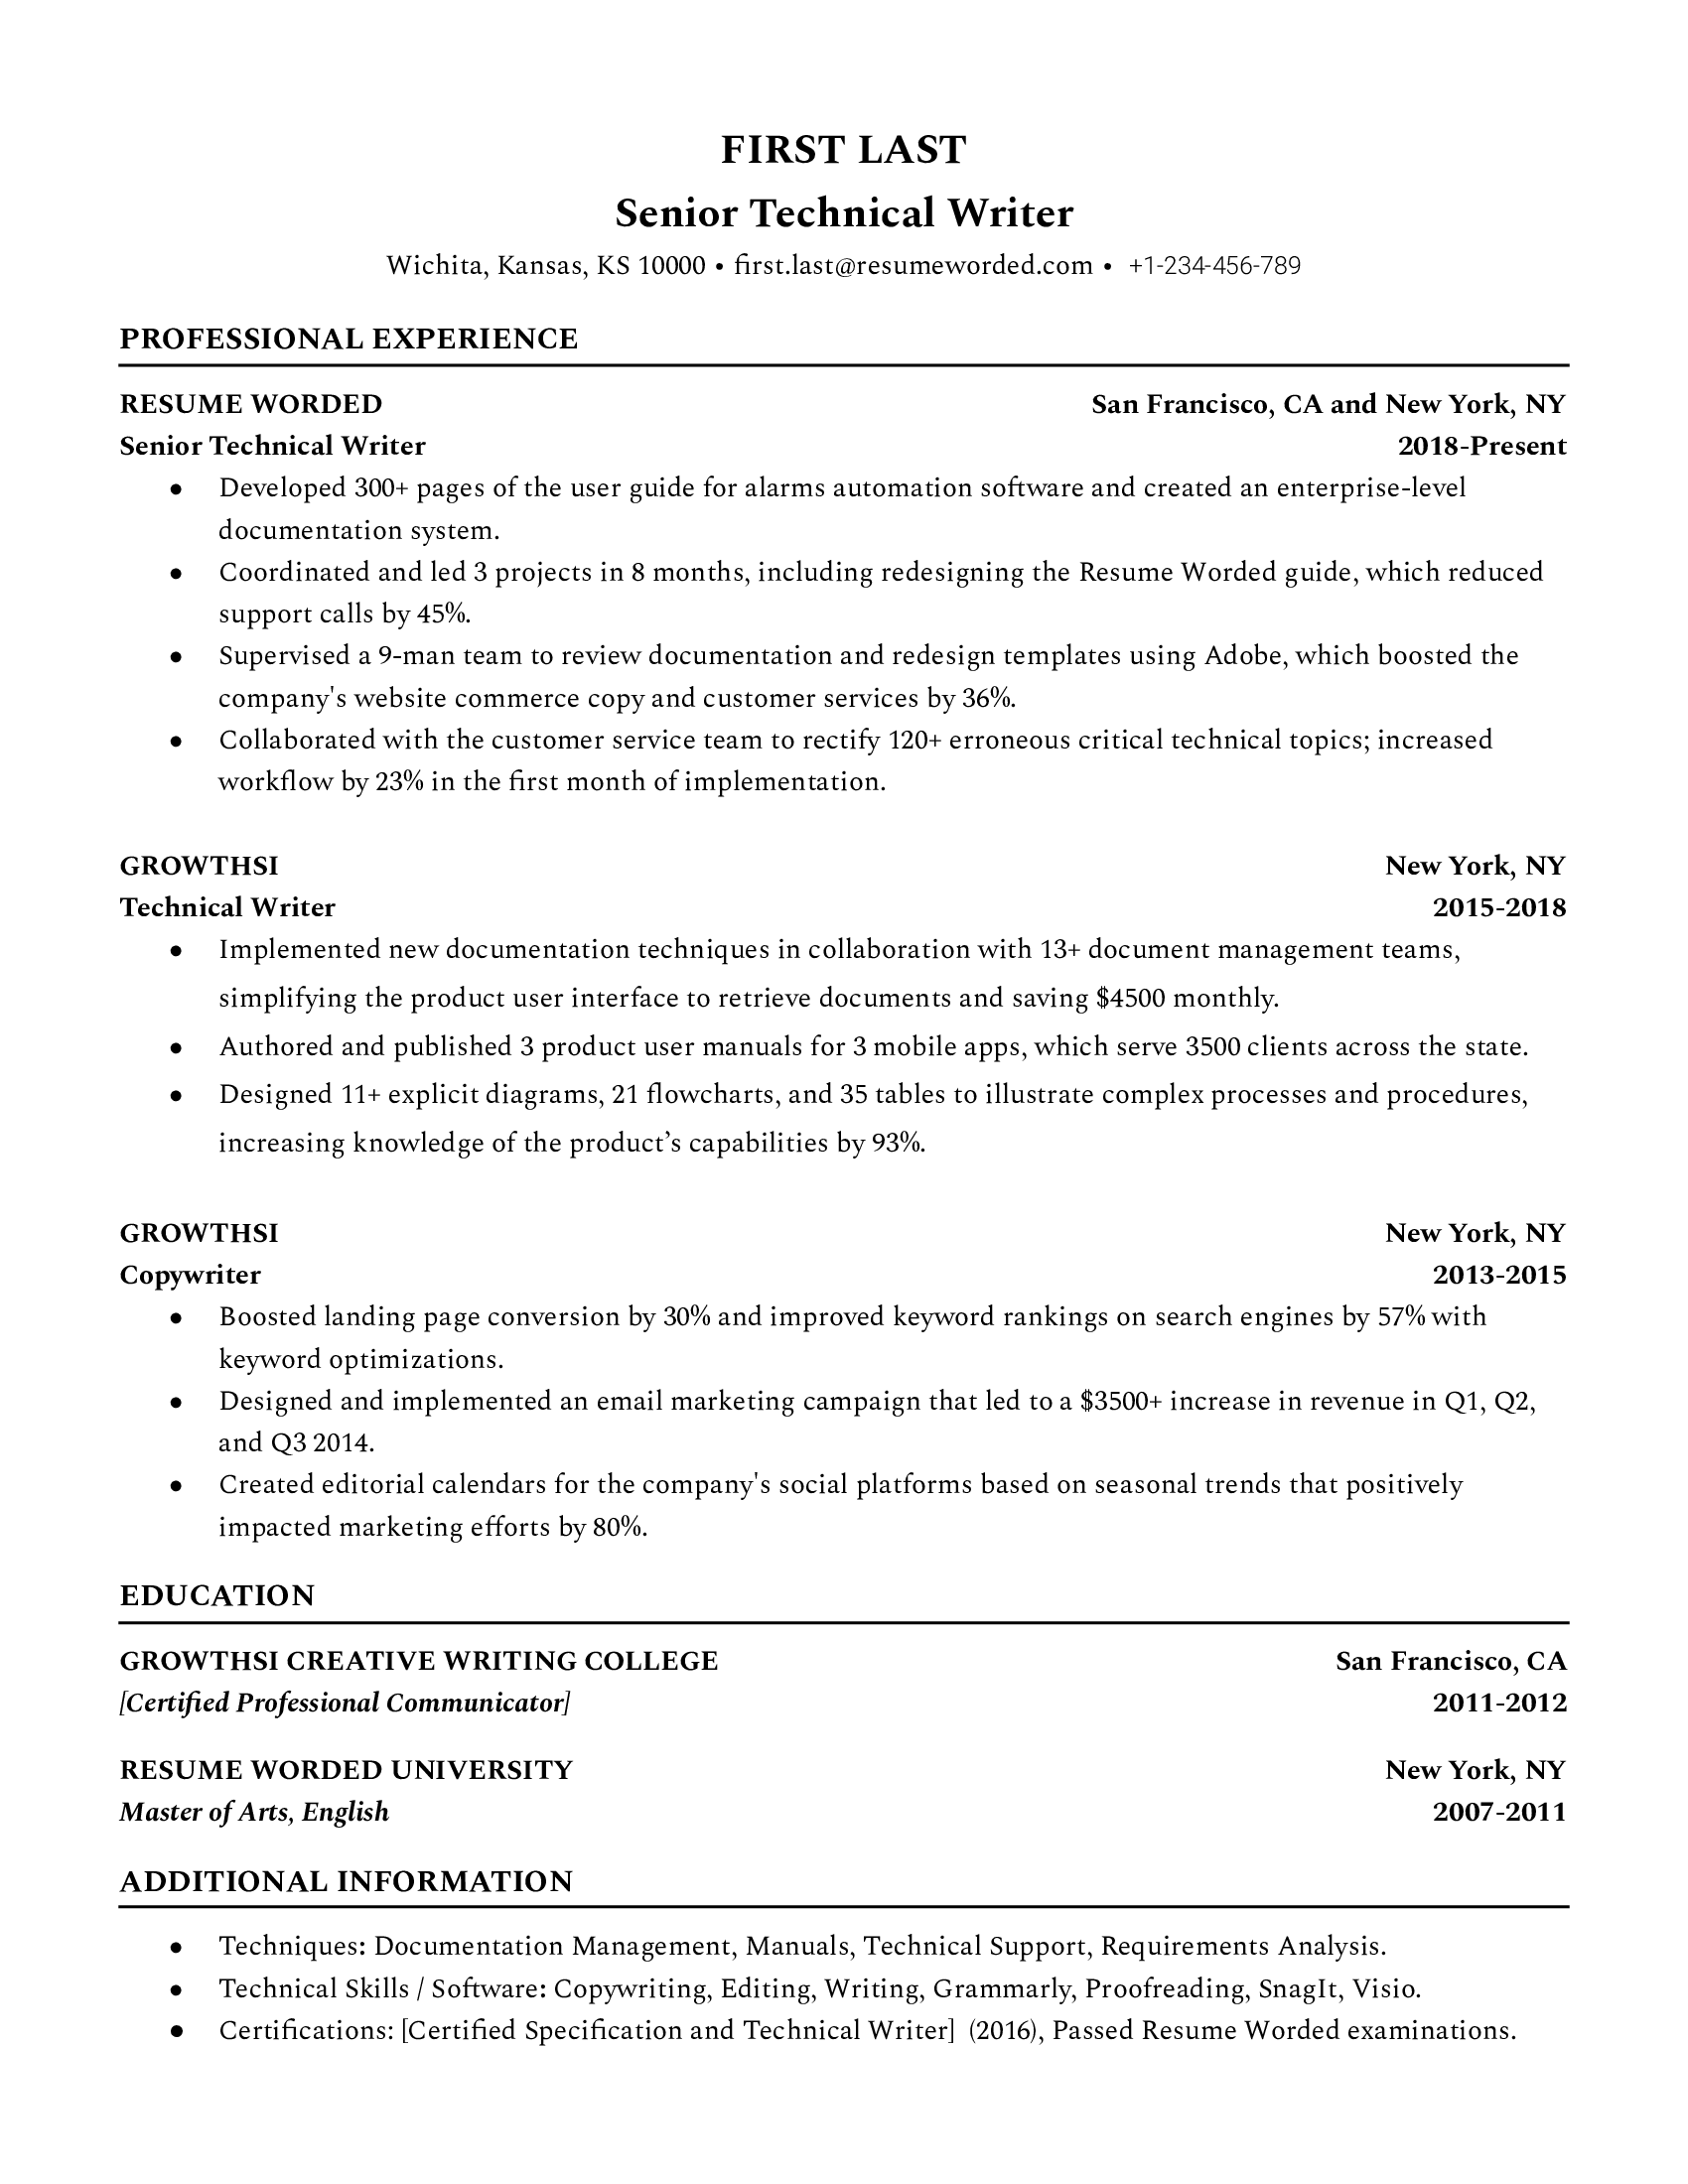 A CV screenshot for a Senior Technical Writer position.